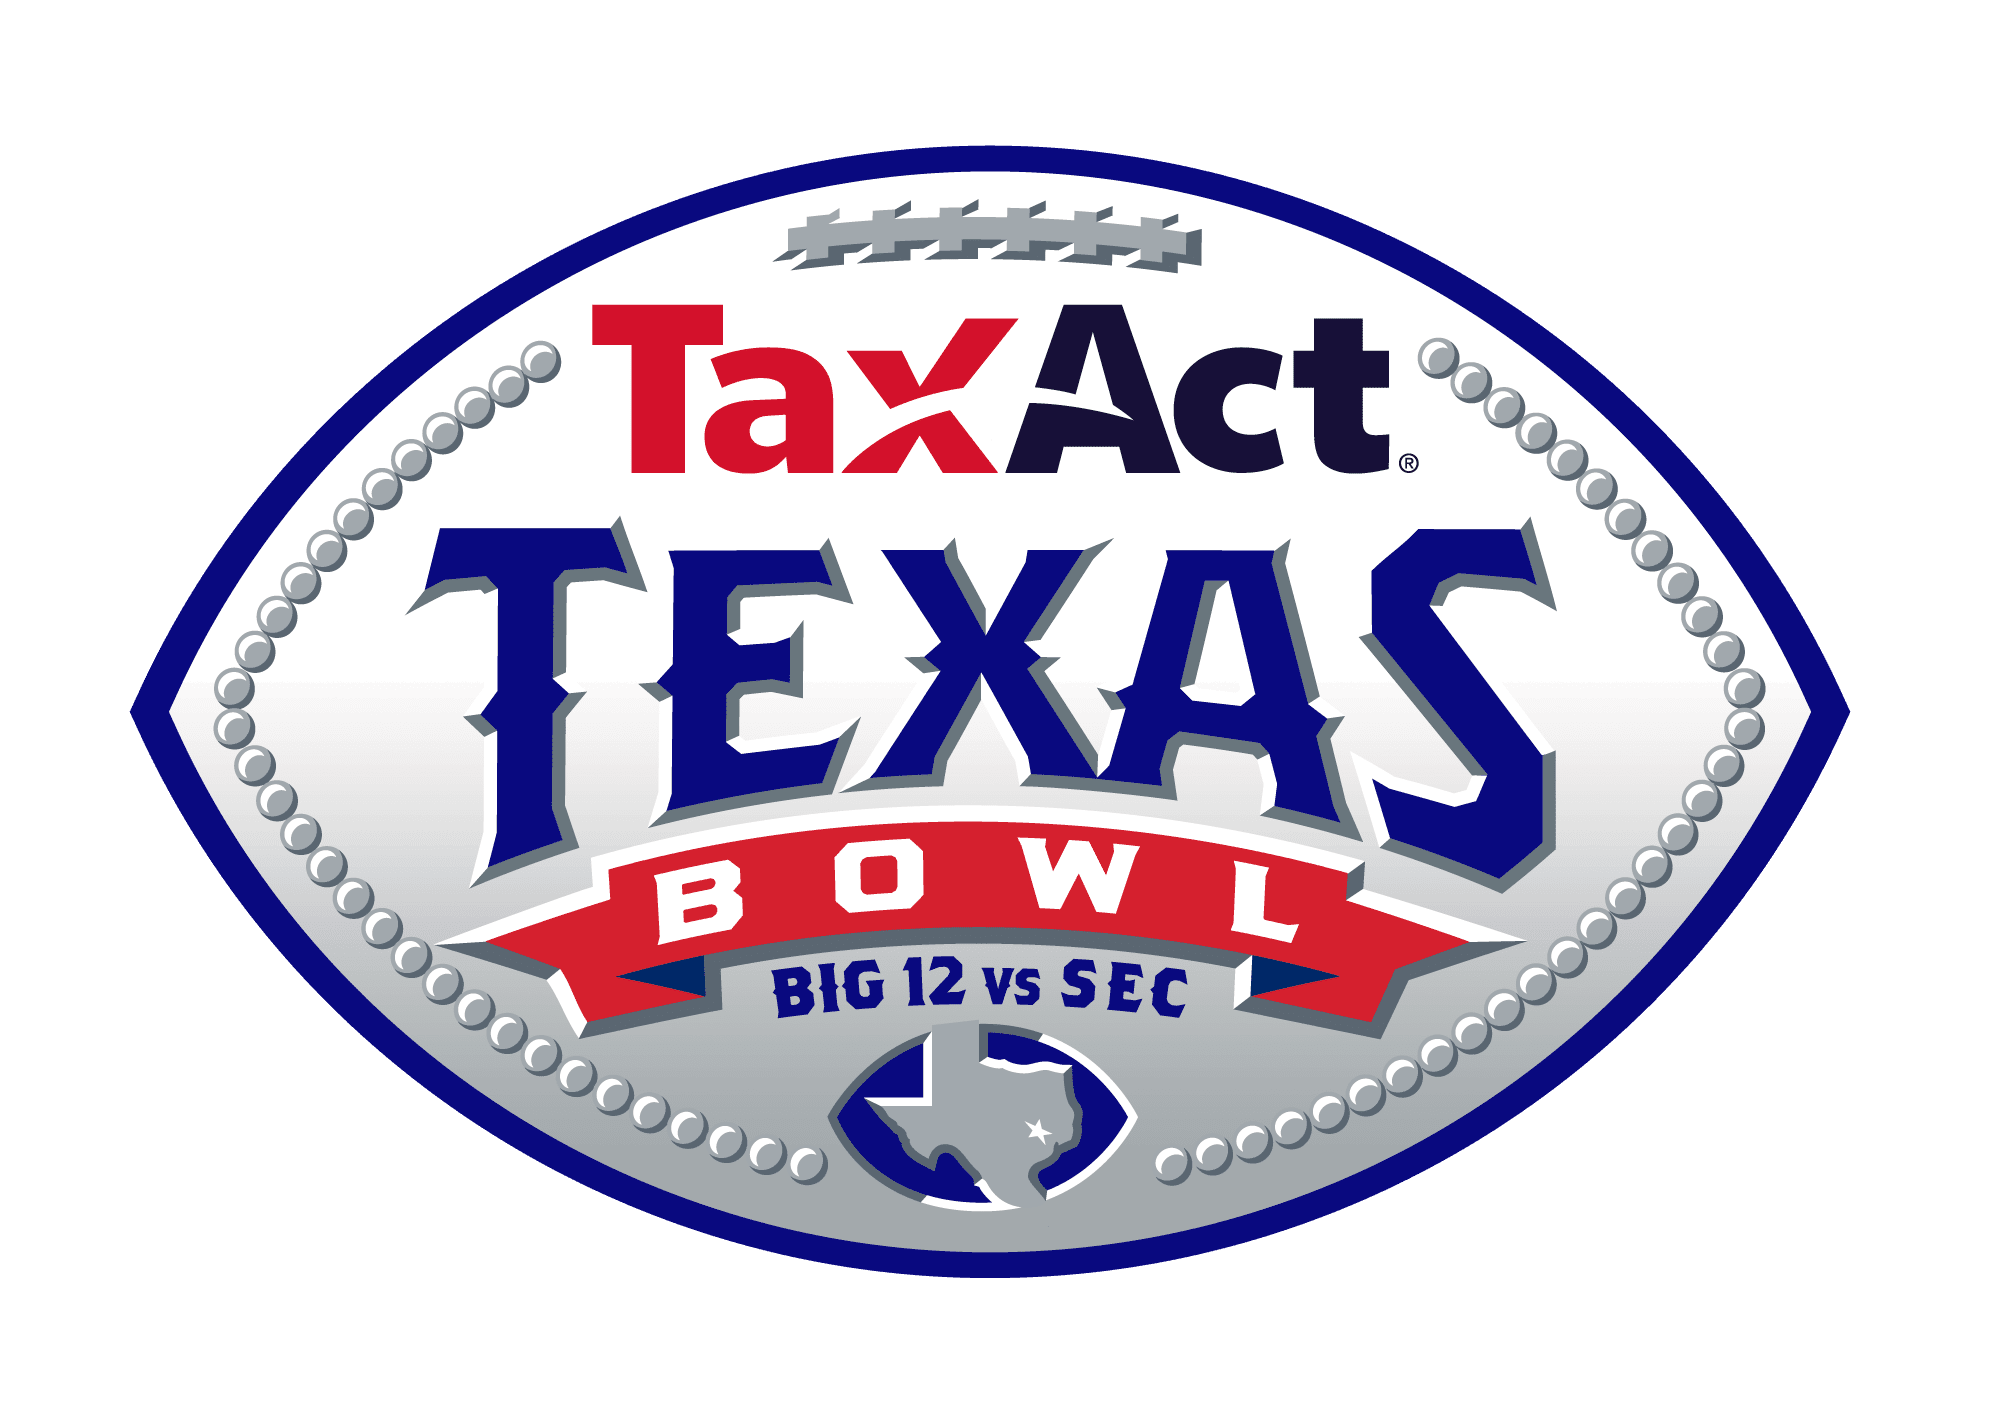 2022 TaxAct Texas Bowl betting